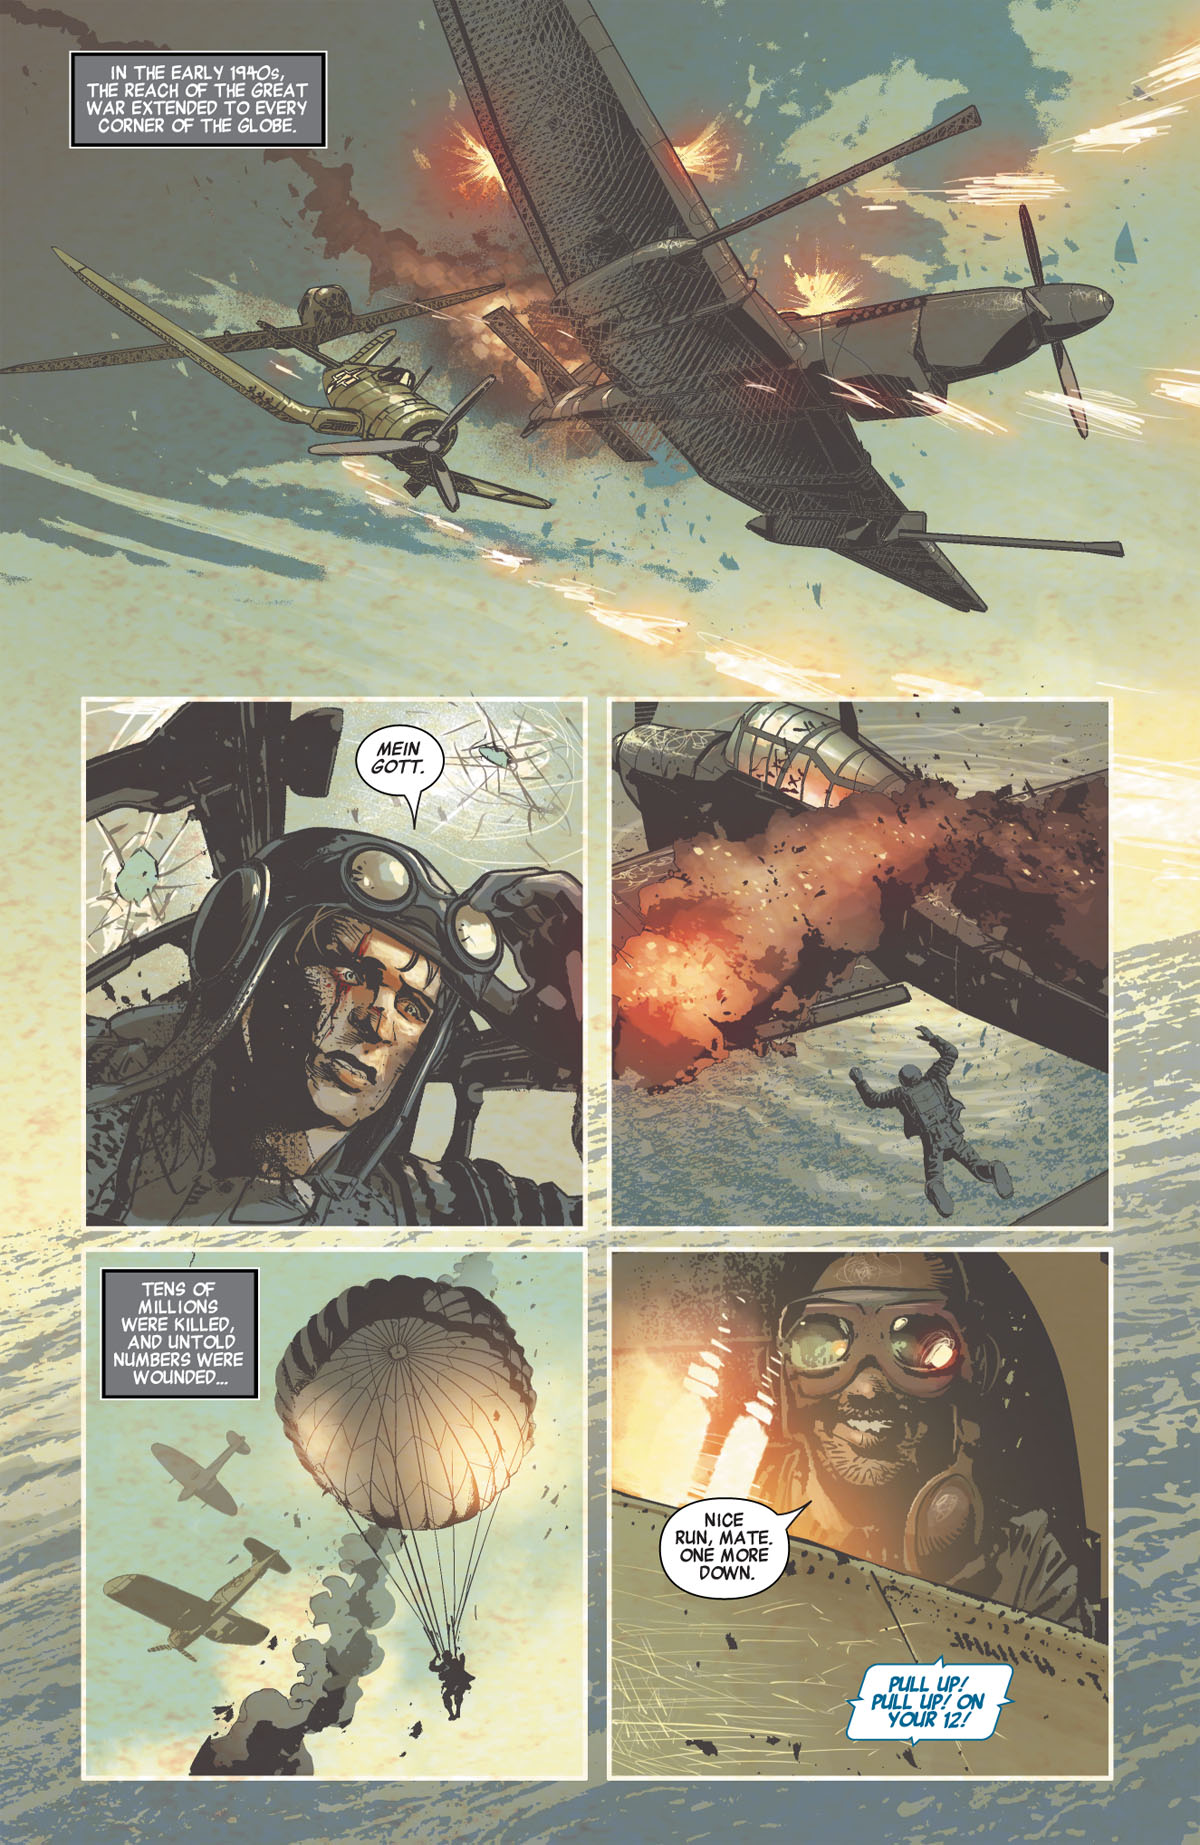 Savage Avengers #2 page 1